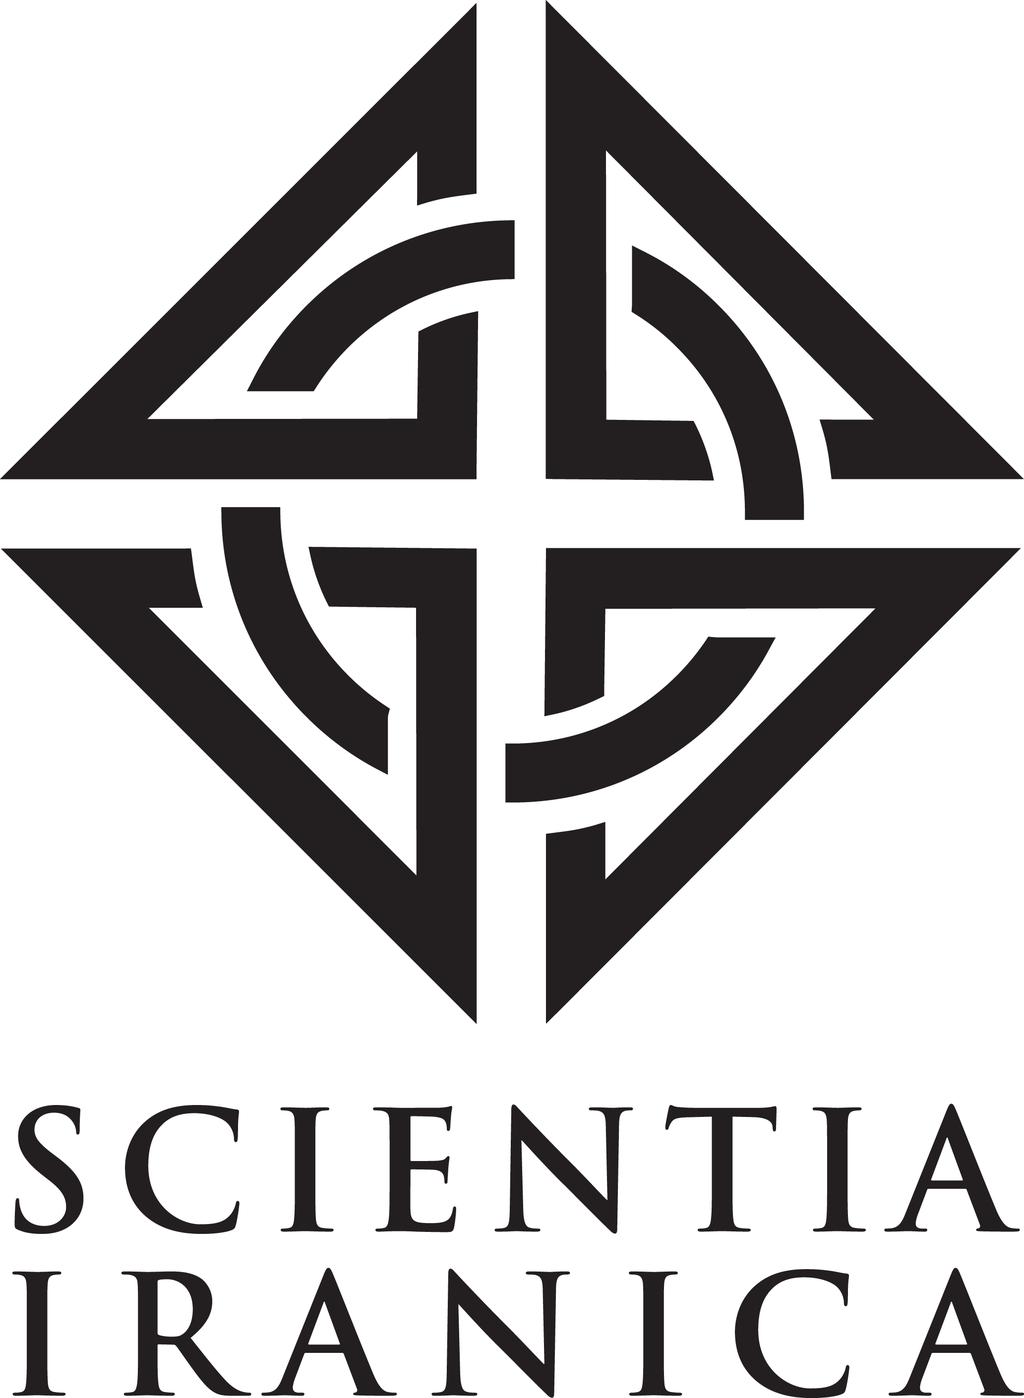 Scientia Iranica E (2015) 22(3), 1189{1202 Sharif University of Technology Scientia Iranica Transactions E: Industrial Engineering www.scientiairanica.